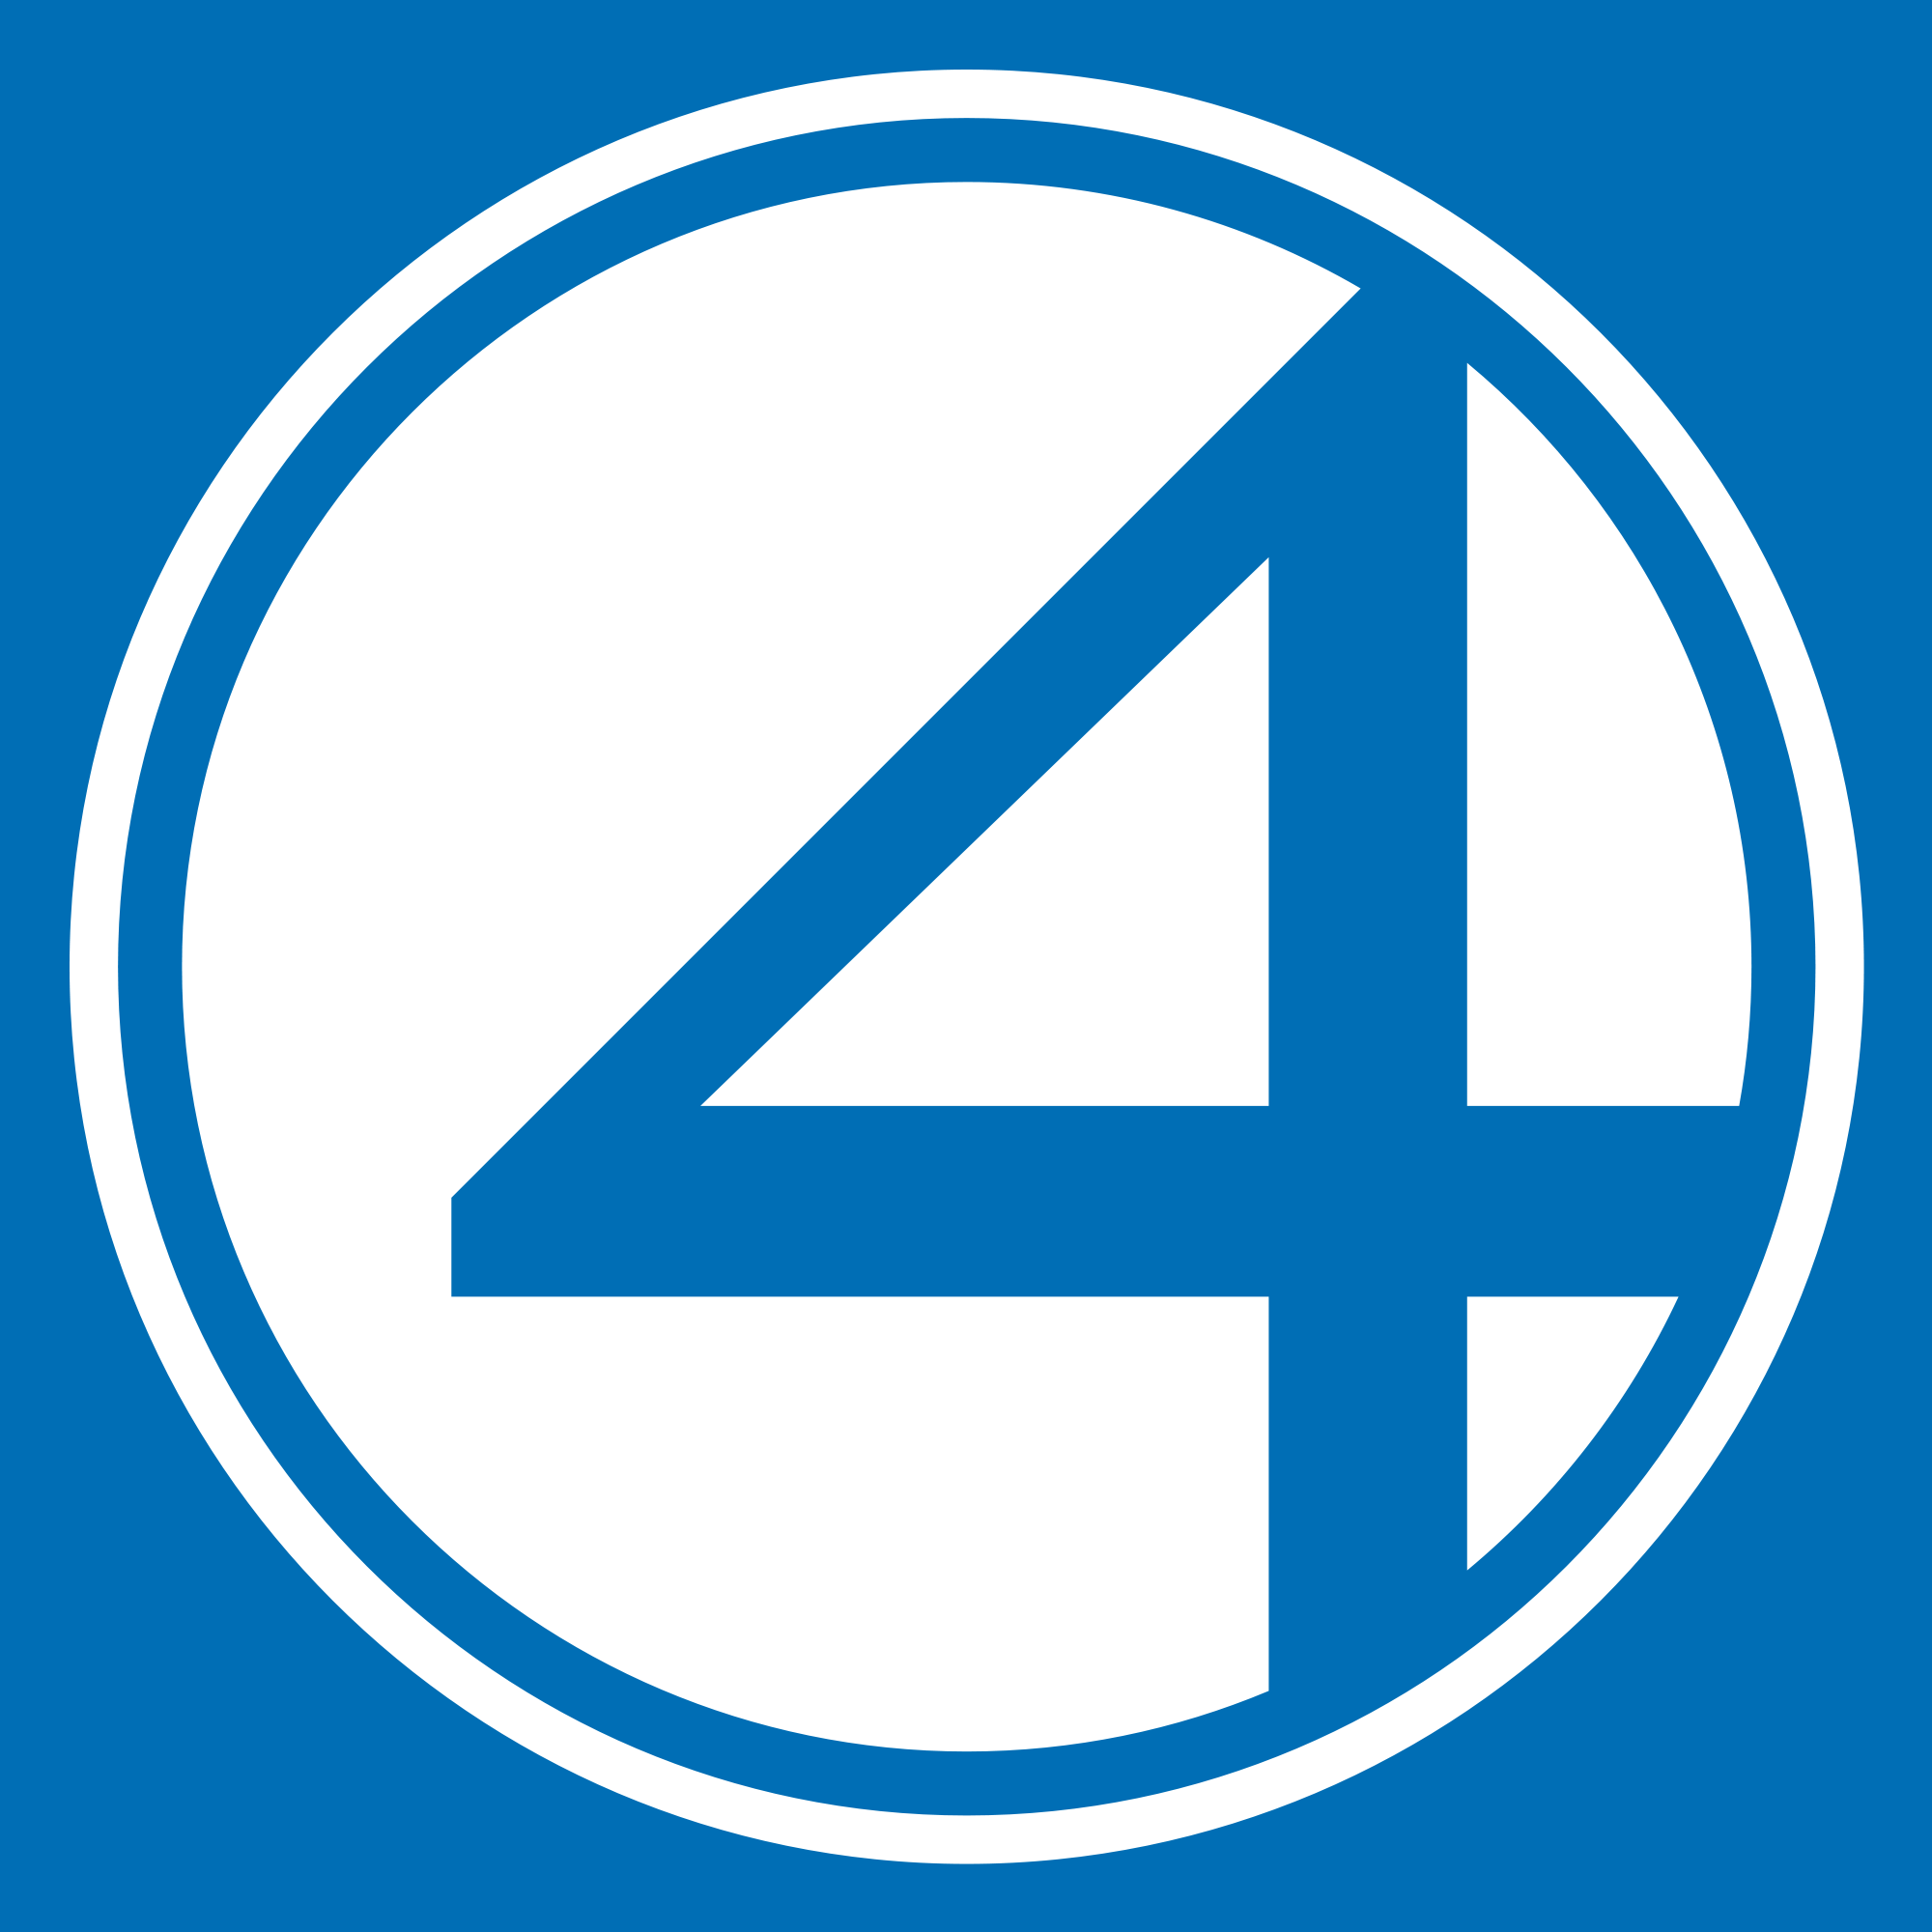 Fantastic Logo - File:Fantastic Four logo (blue and white).svg - Wikimedia Commons